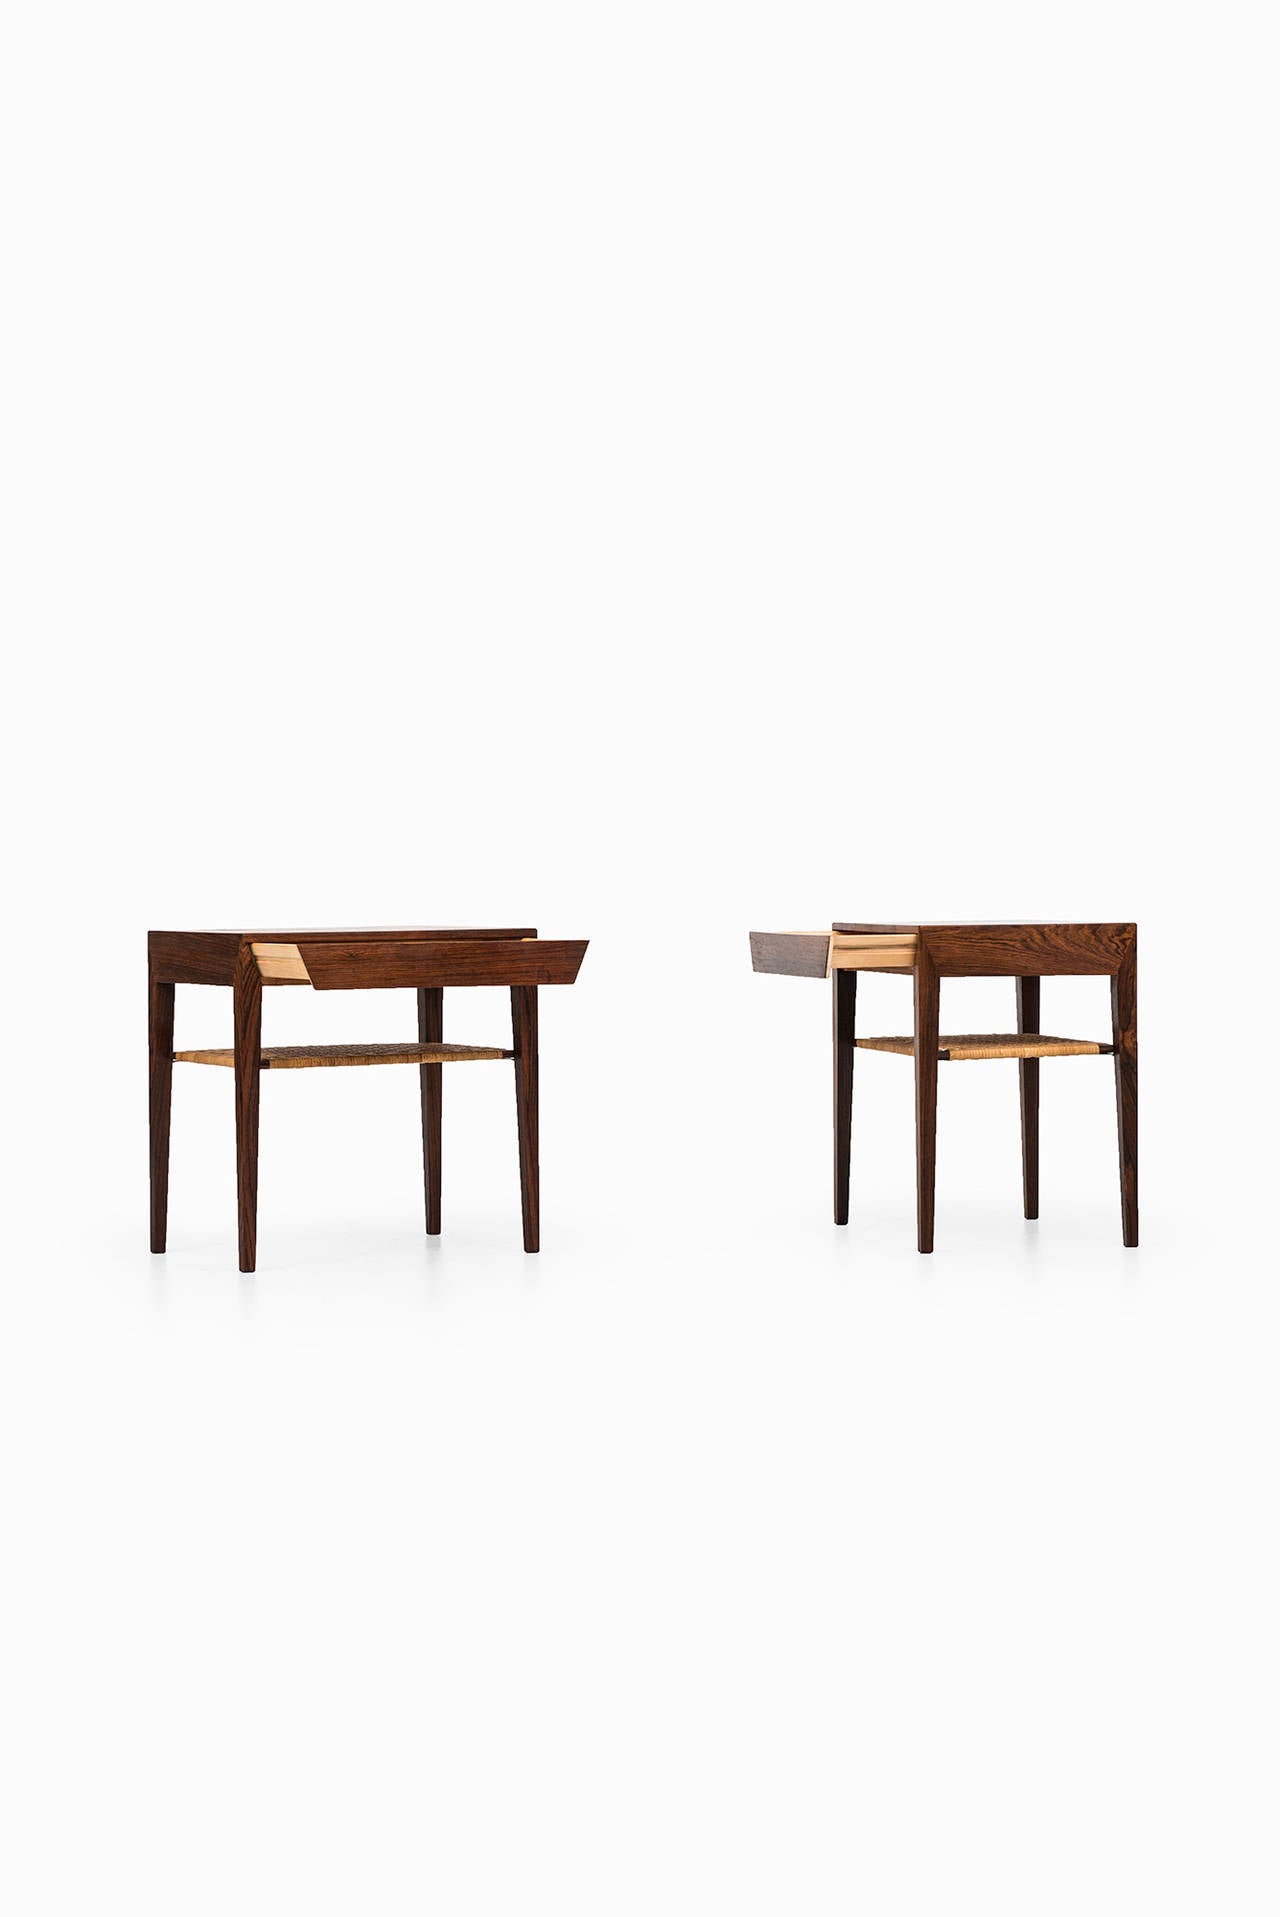 Rare pair of freestanding bedside tables designed by Severin Hansen. Produced by Haslev møbelsnedkeri in Denmark.